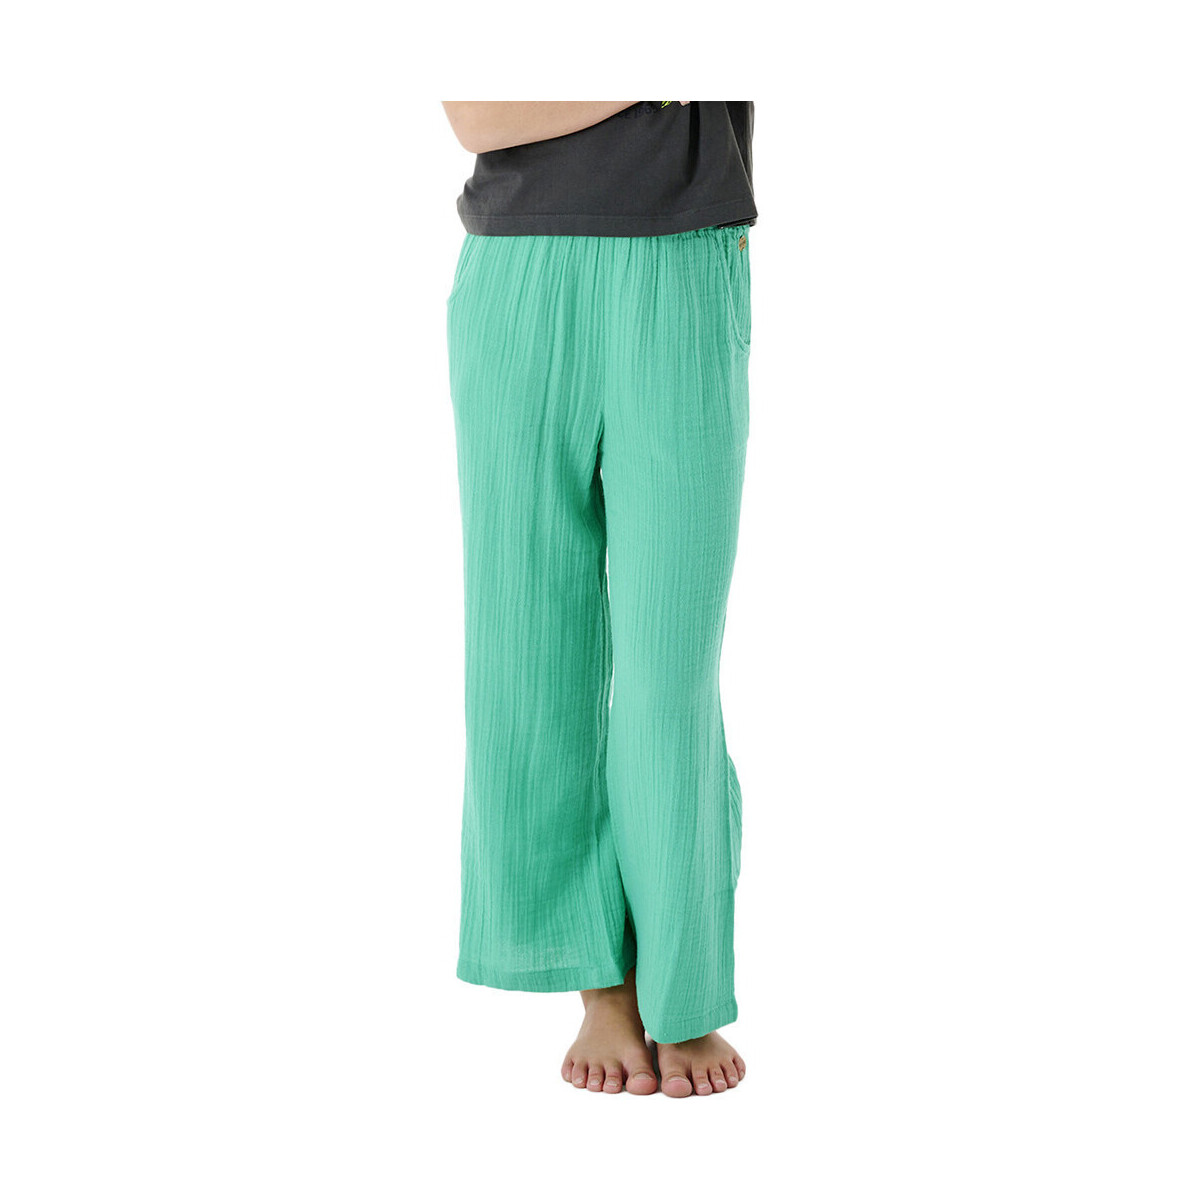 textil Niños Pantalones de chándal Rip Curl PREMIUM SURF BEACH PANT - GIRL Verde